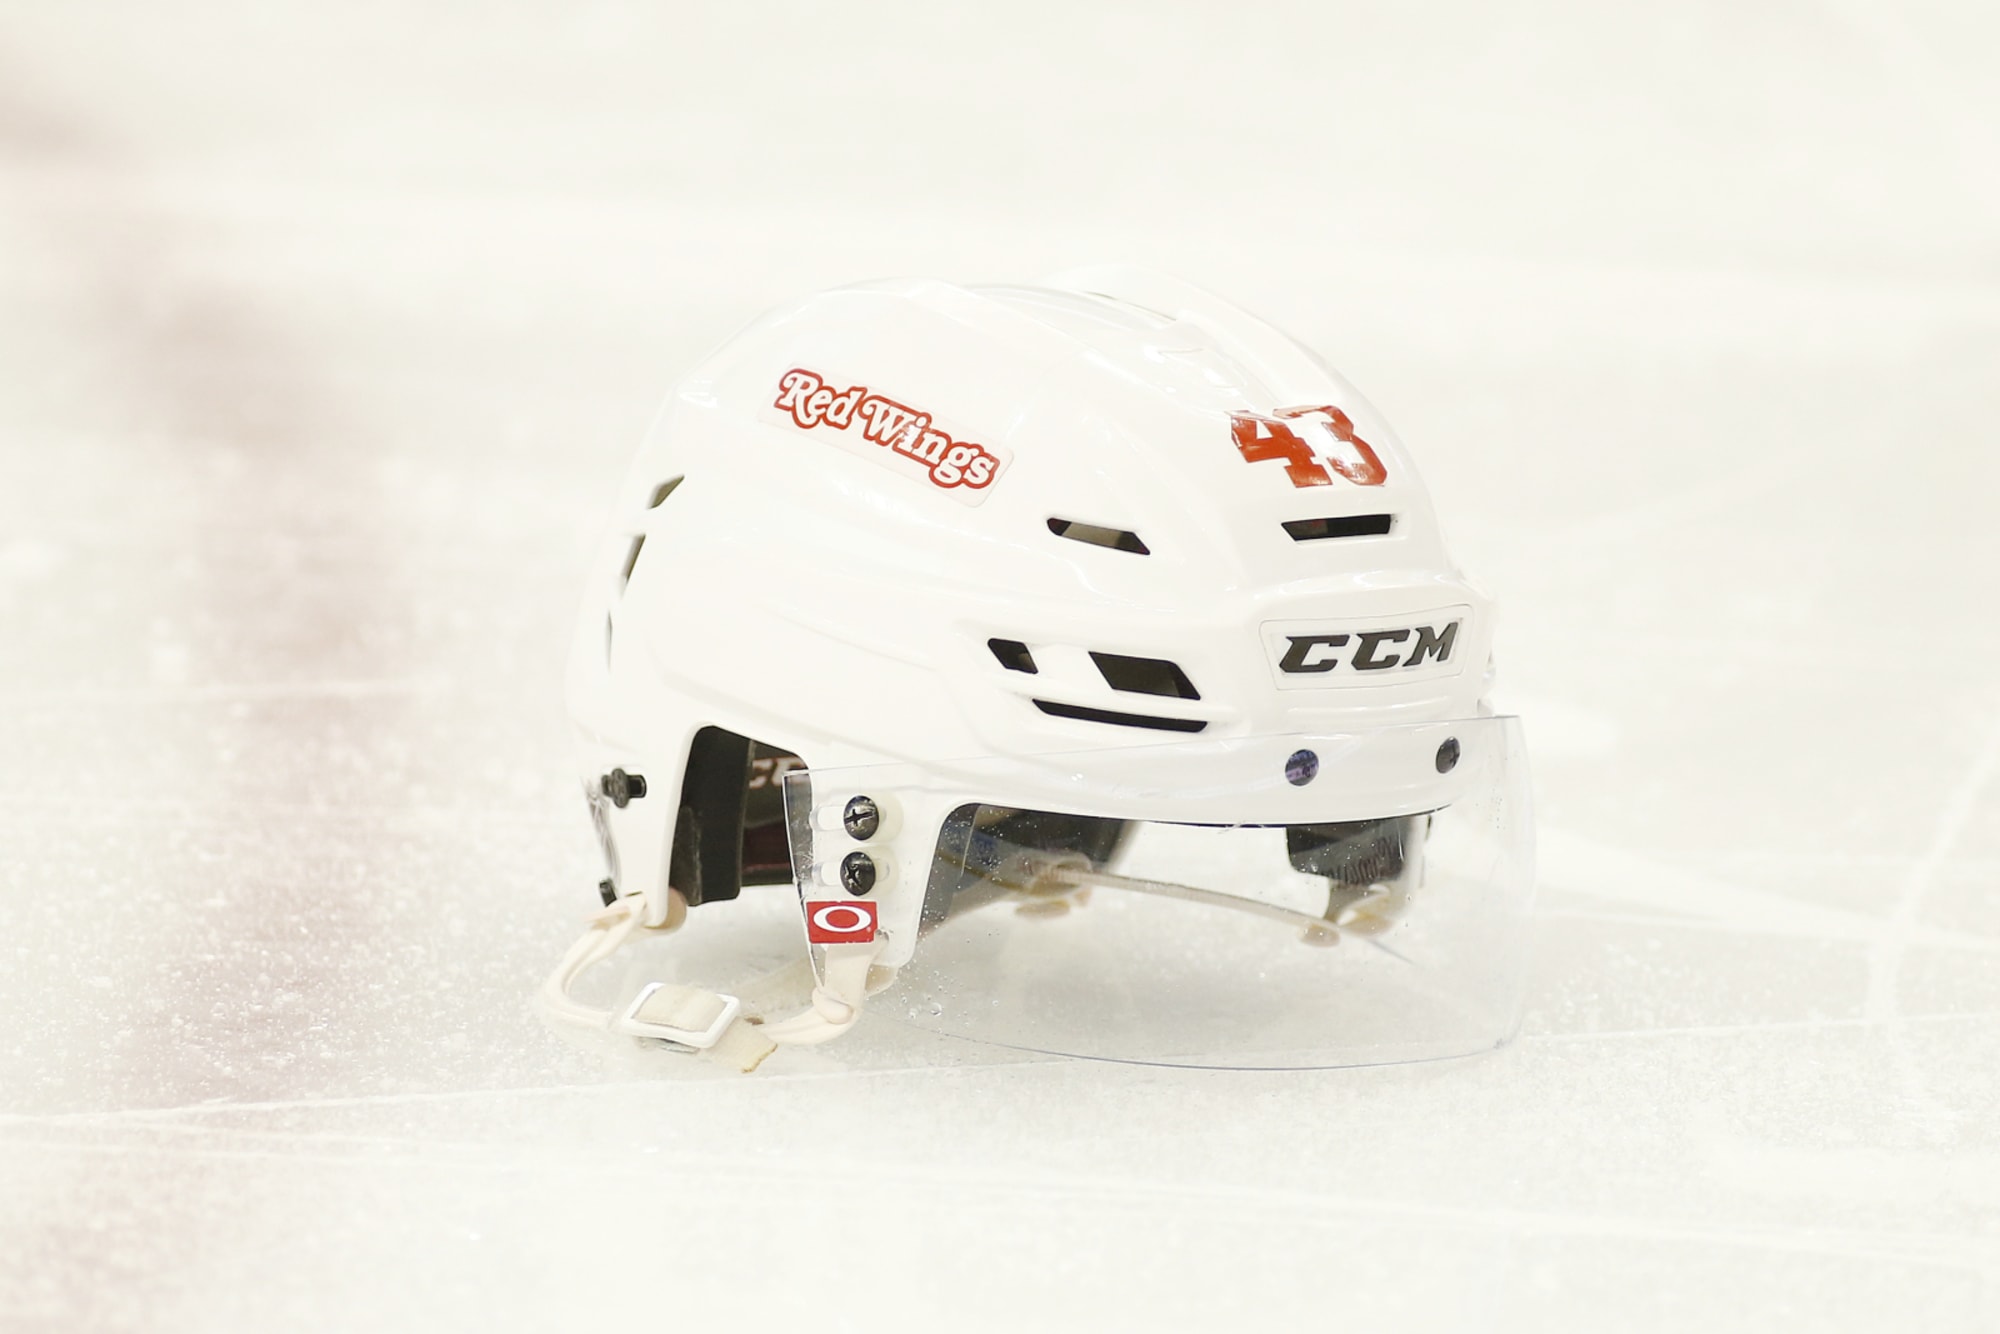 Red Wings announce new helmet sponsor: Meijer